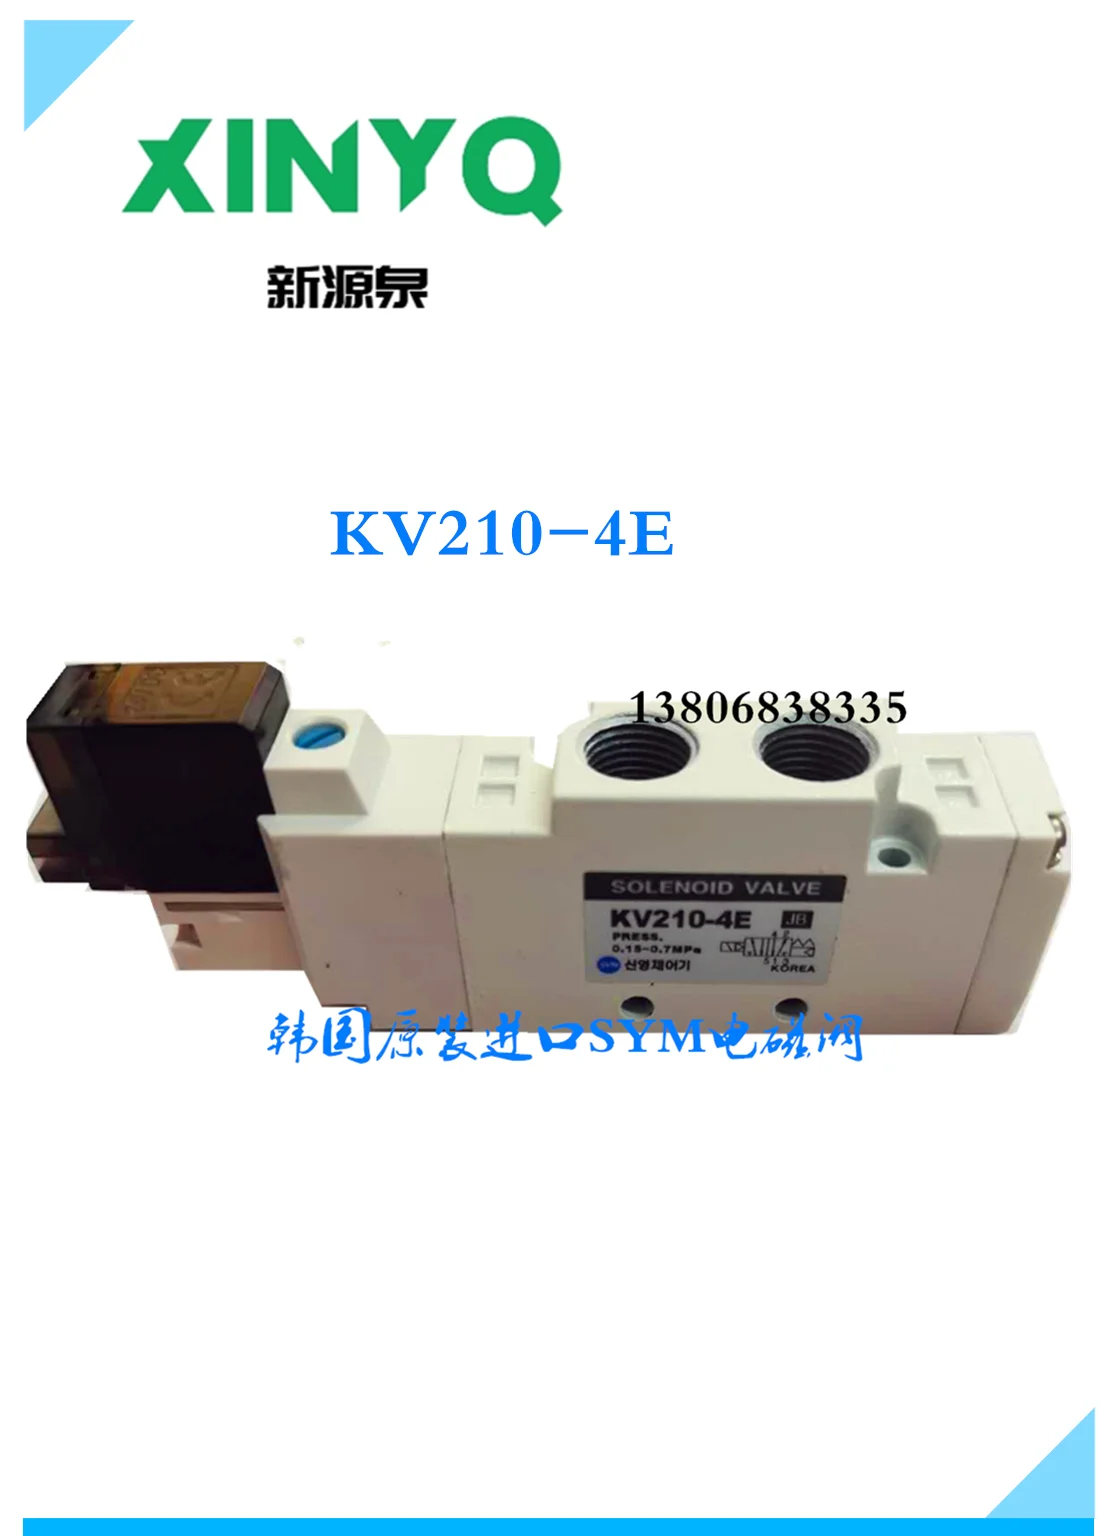 

Pneumatic original SYM solenoid valve KV210-4E two-position five-way control valve